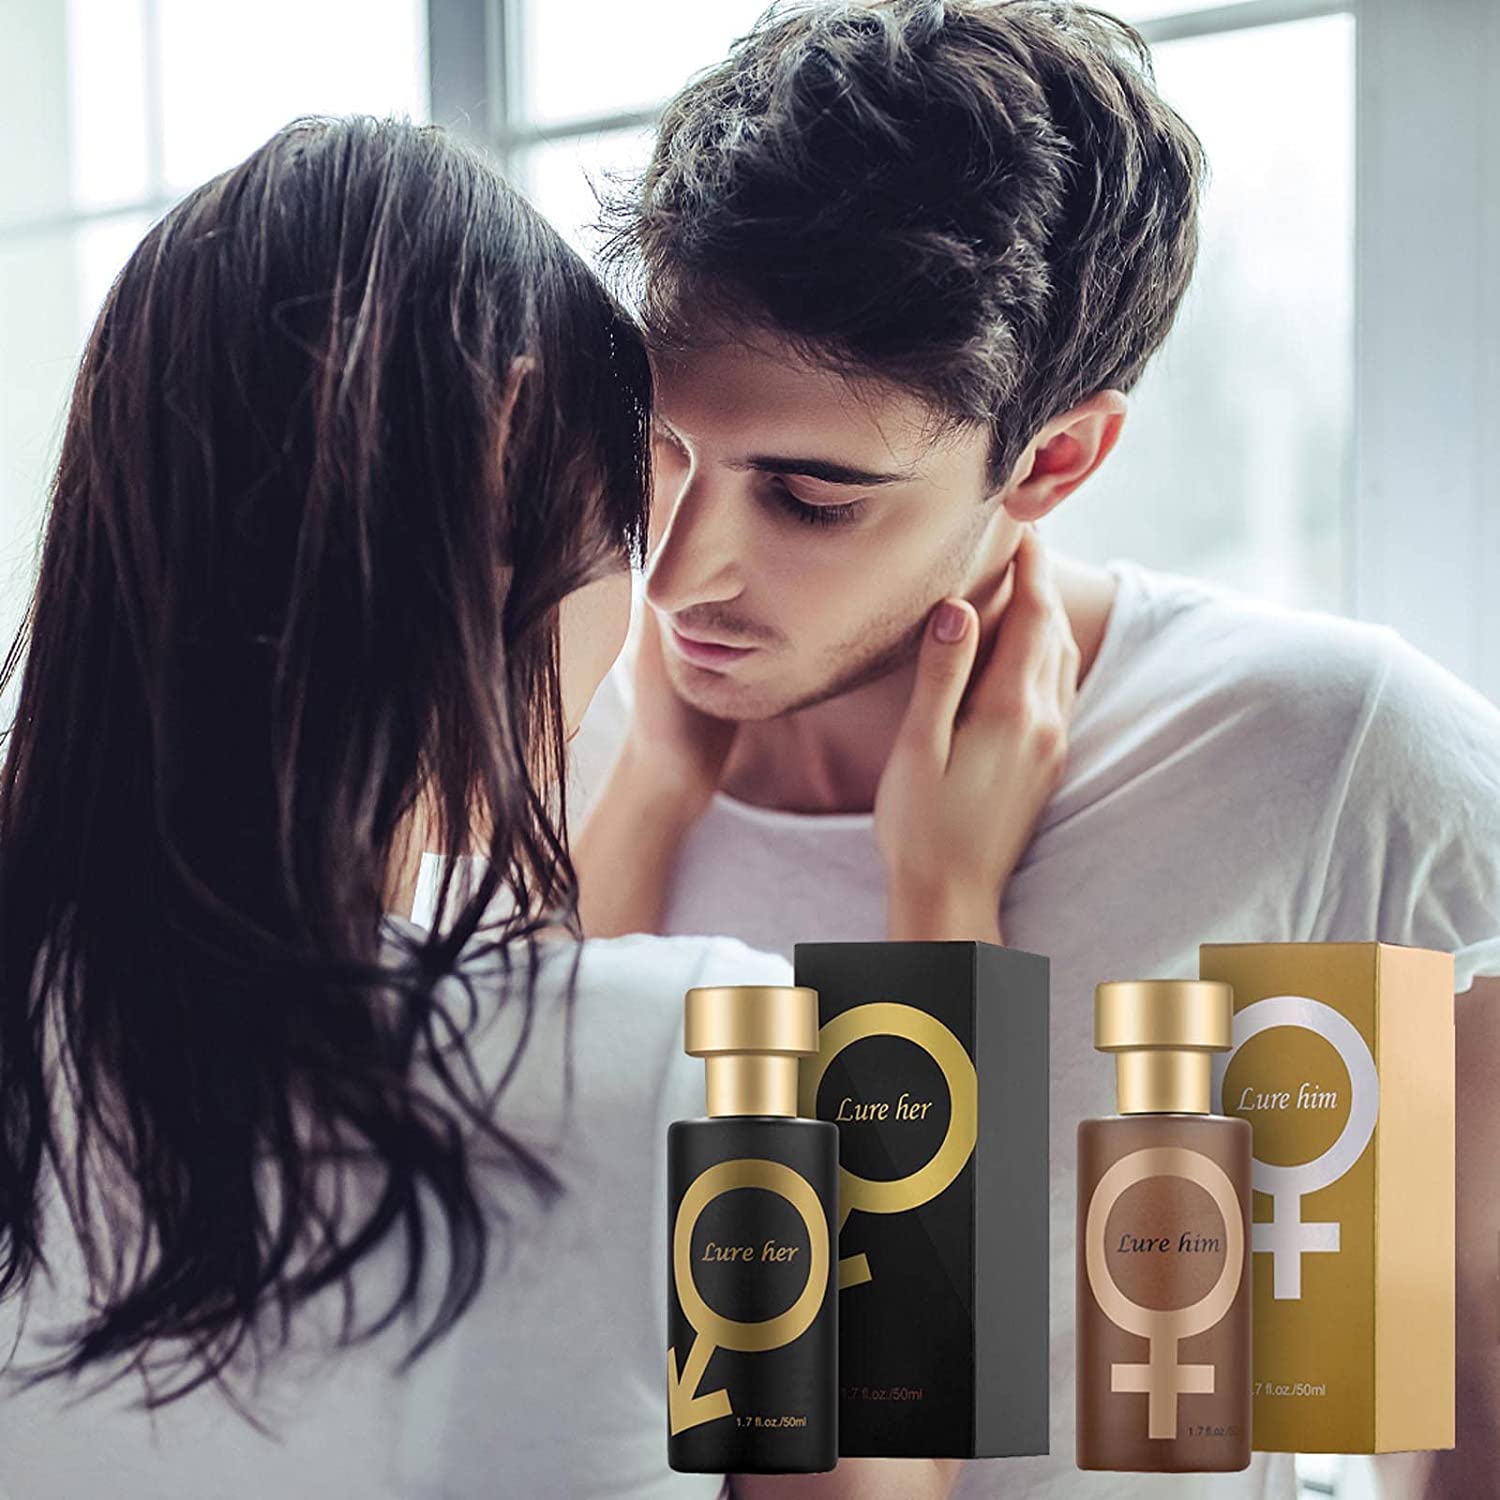 50ml Lure her perfume Lure for Her Pheromone Long Lasting Mens